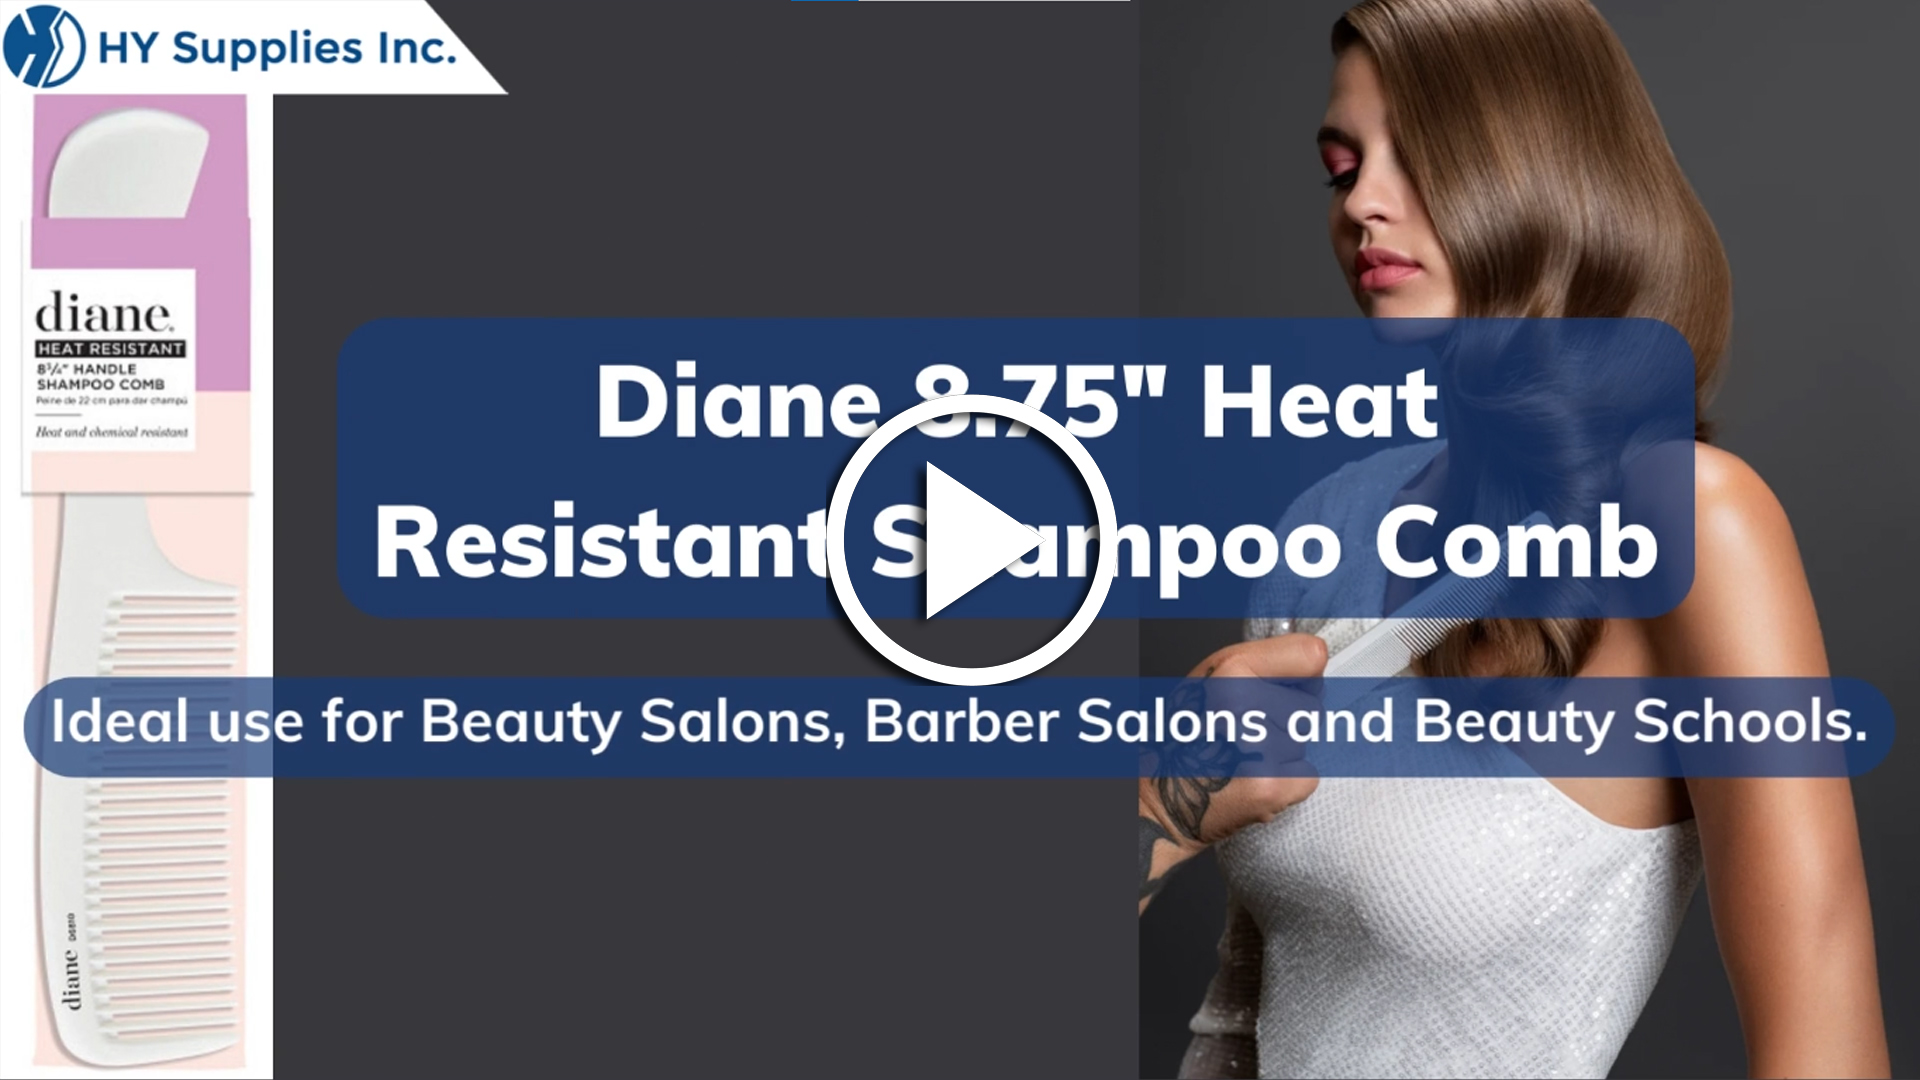 Diane 8.75"Heat Resistant Shampoo Comb